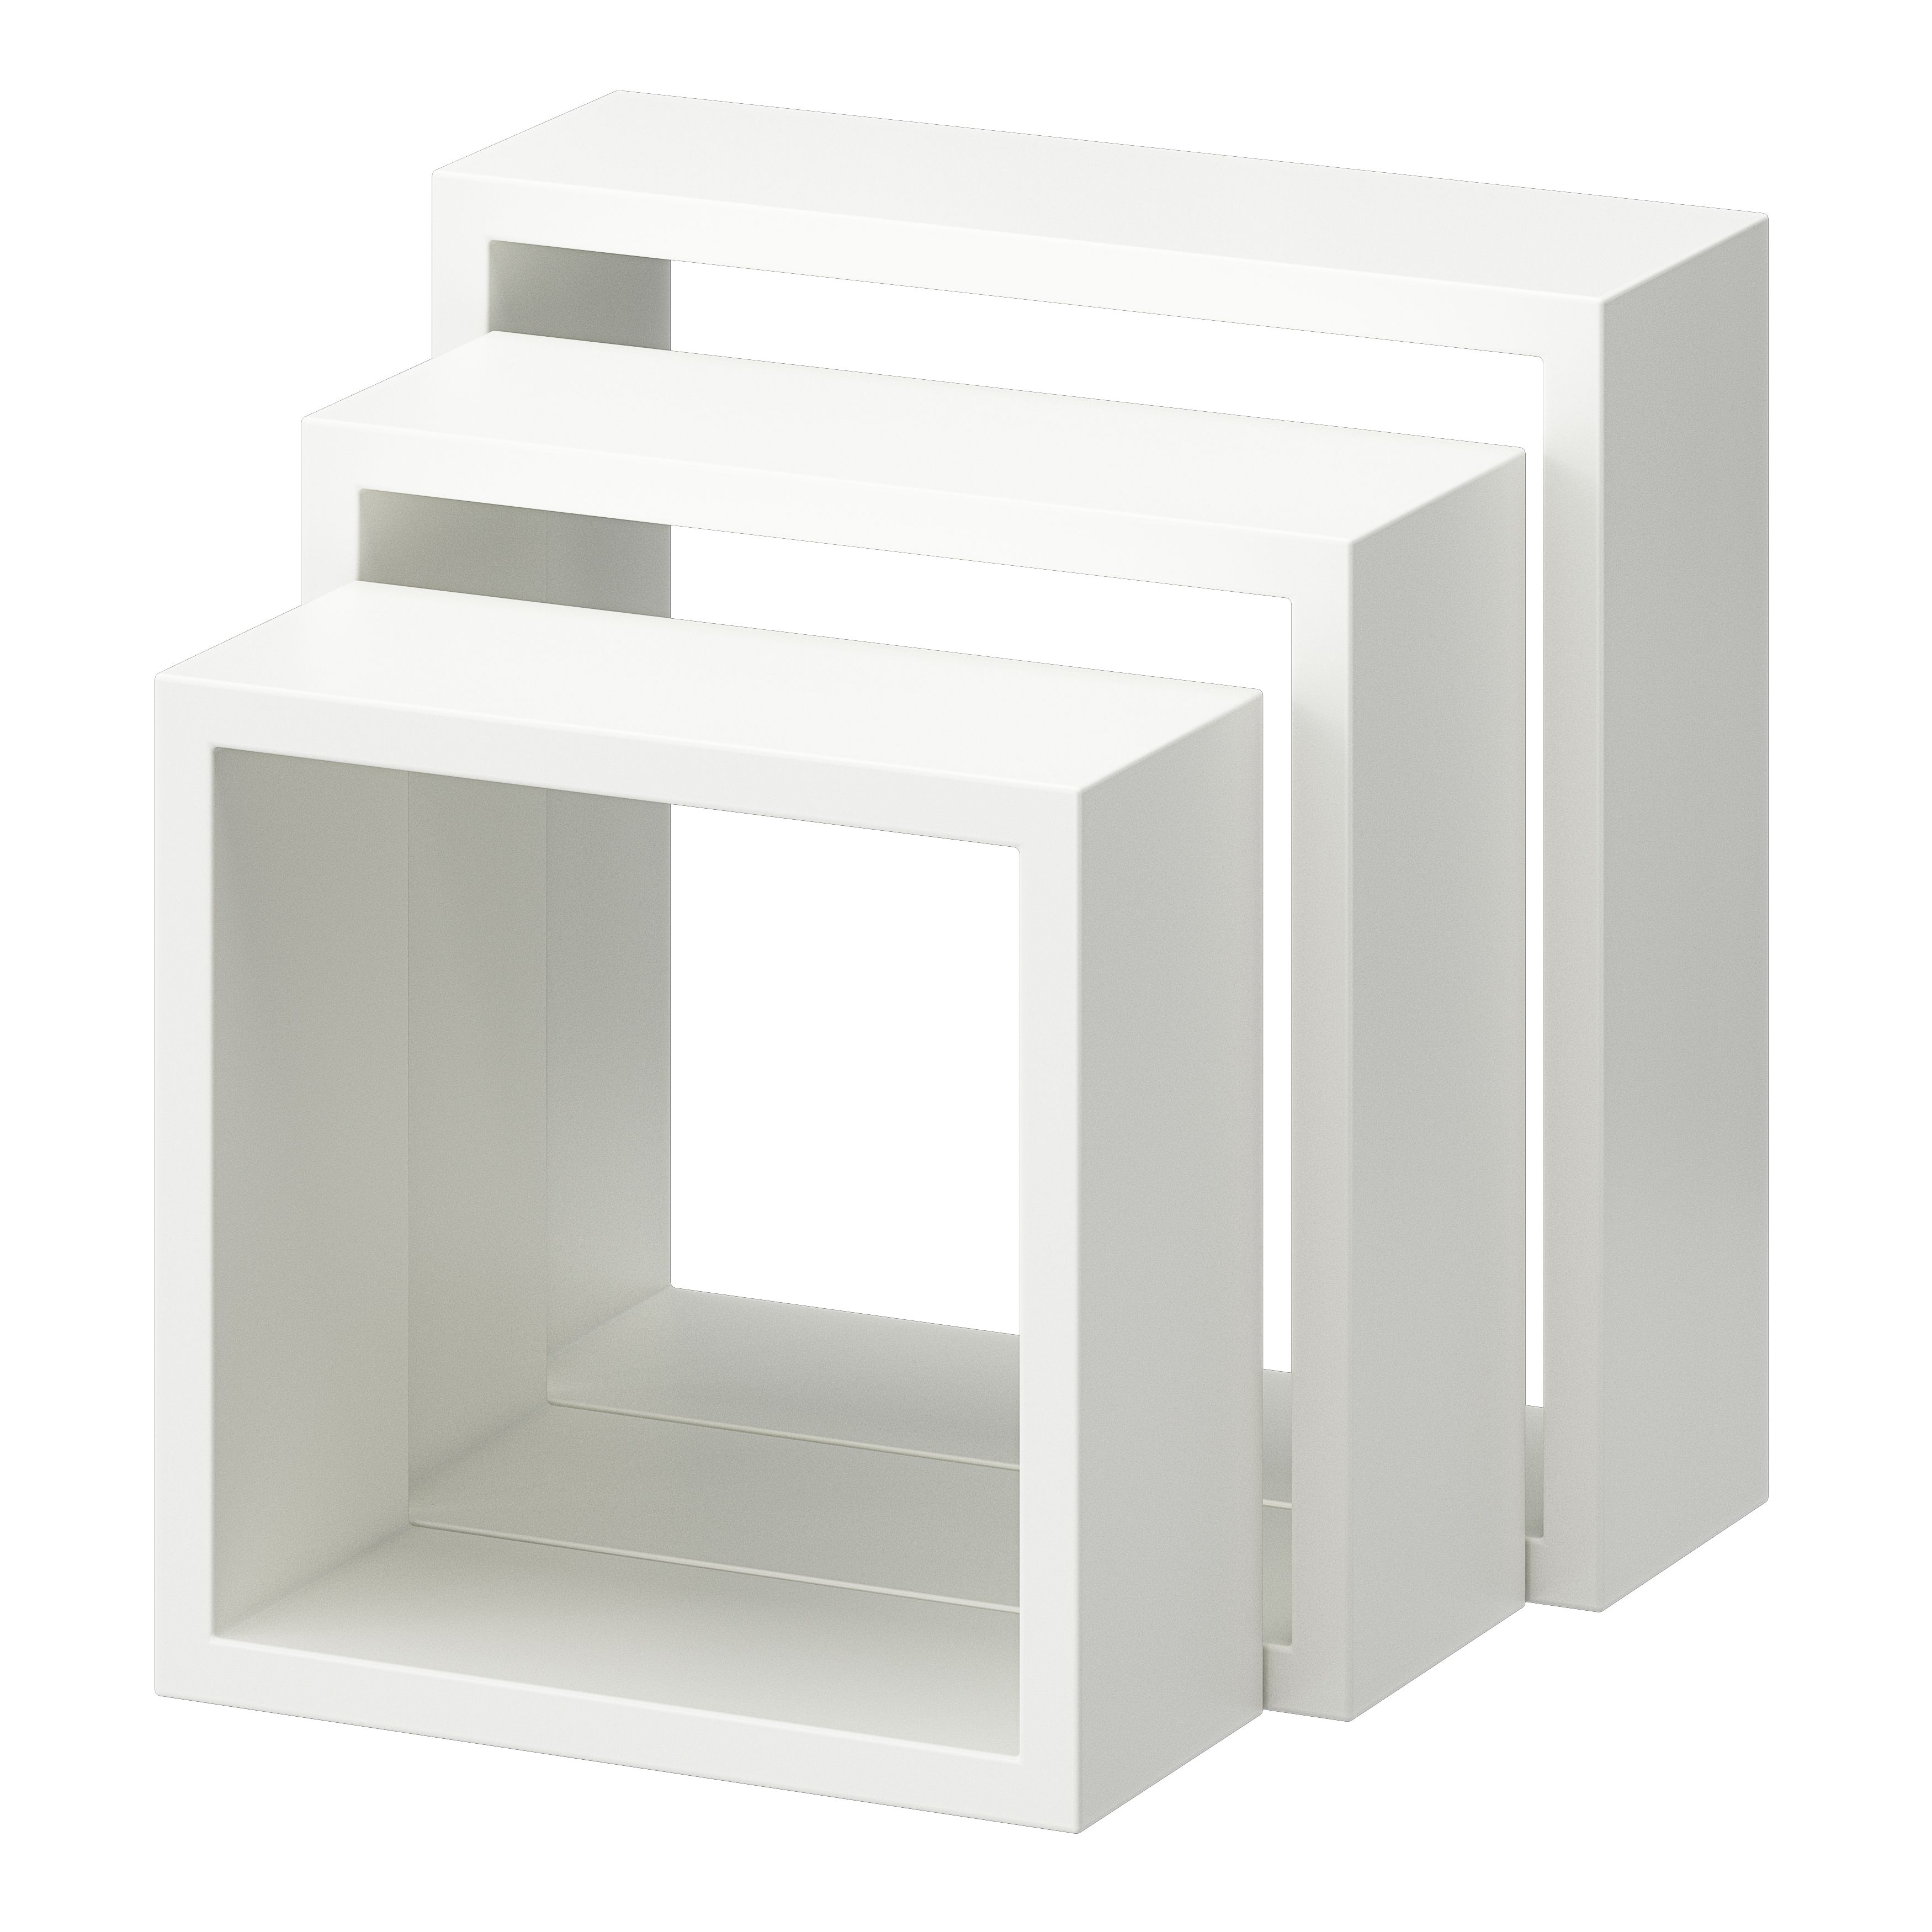 GoodHome Rigga Cube shelf (L)23cm x (D)9.8cm, Set of 3